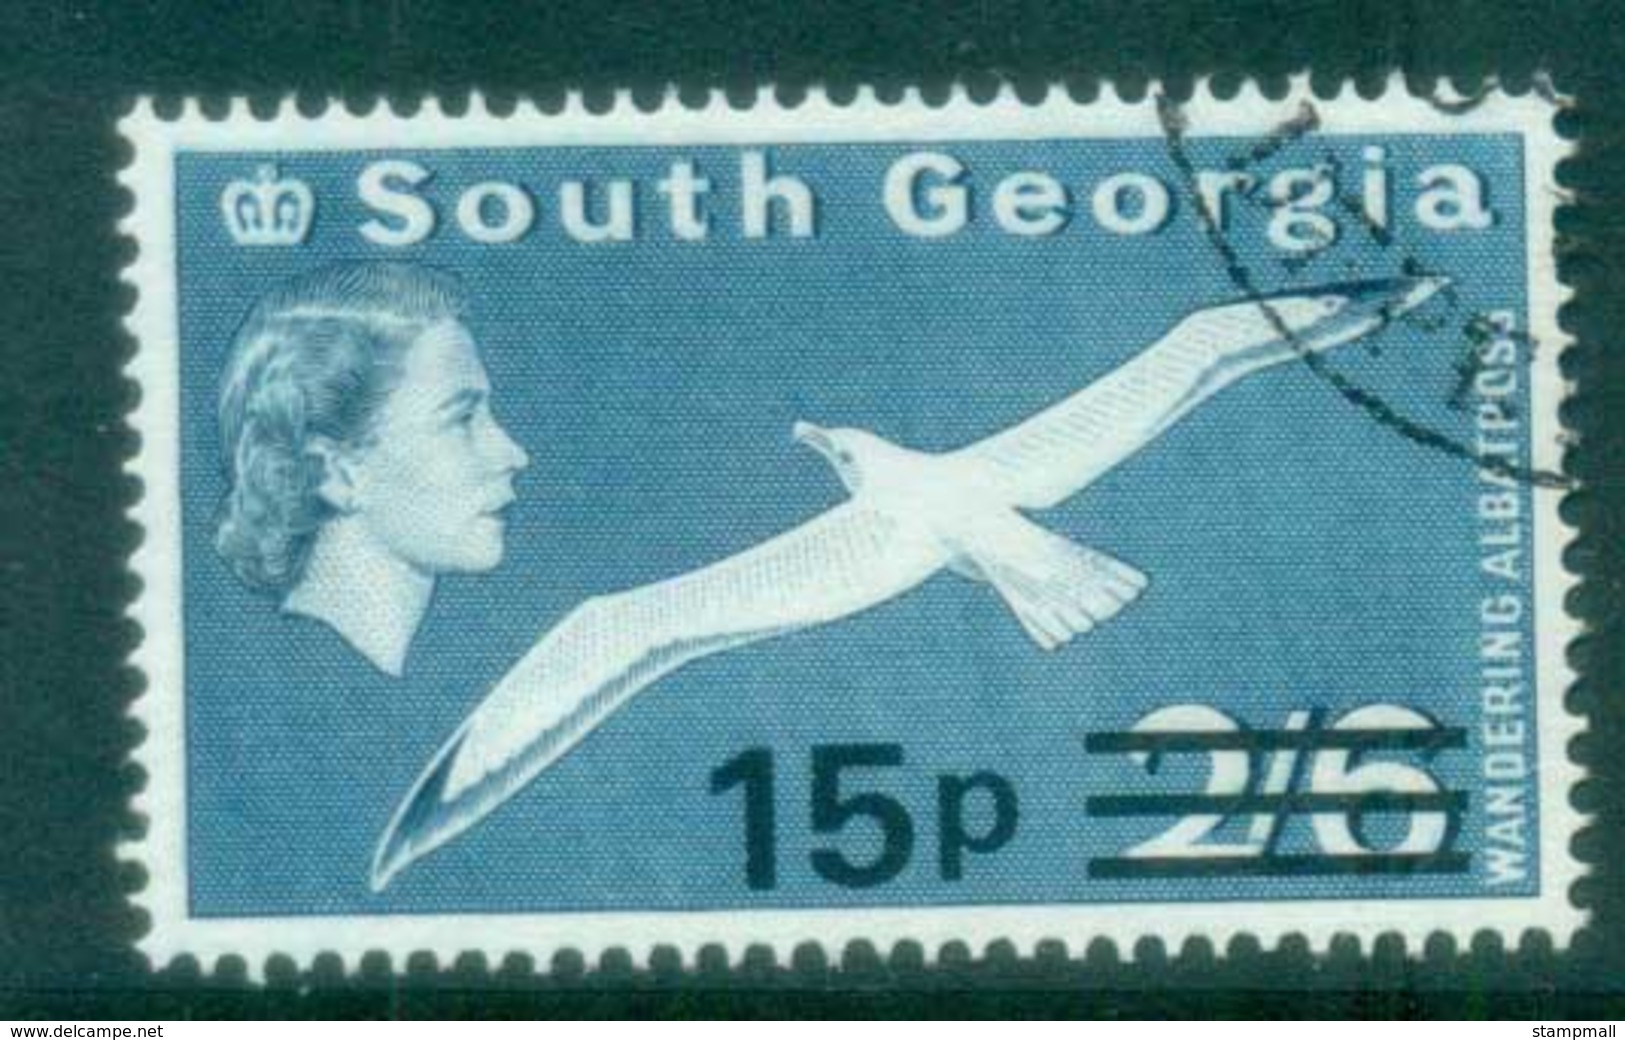 South Georgia 1971-72 QEII Definitives Surcharges 15p On 2/6d FU Lot77993 - South Georgia